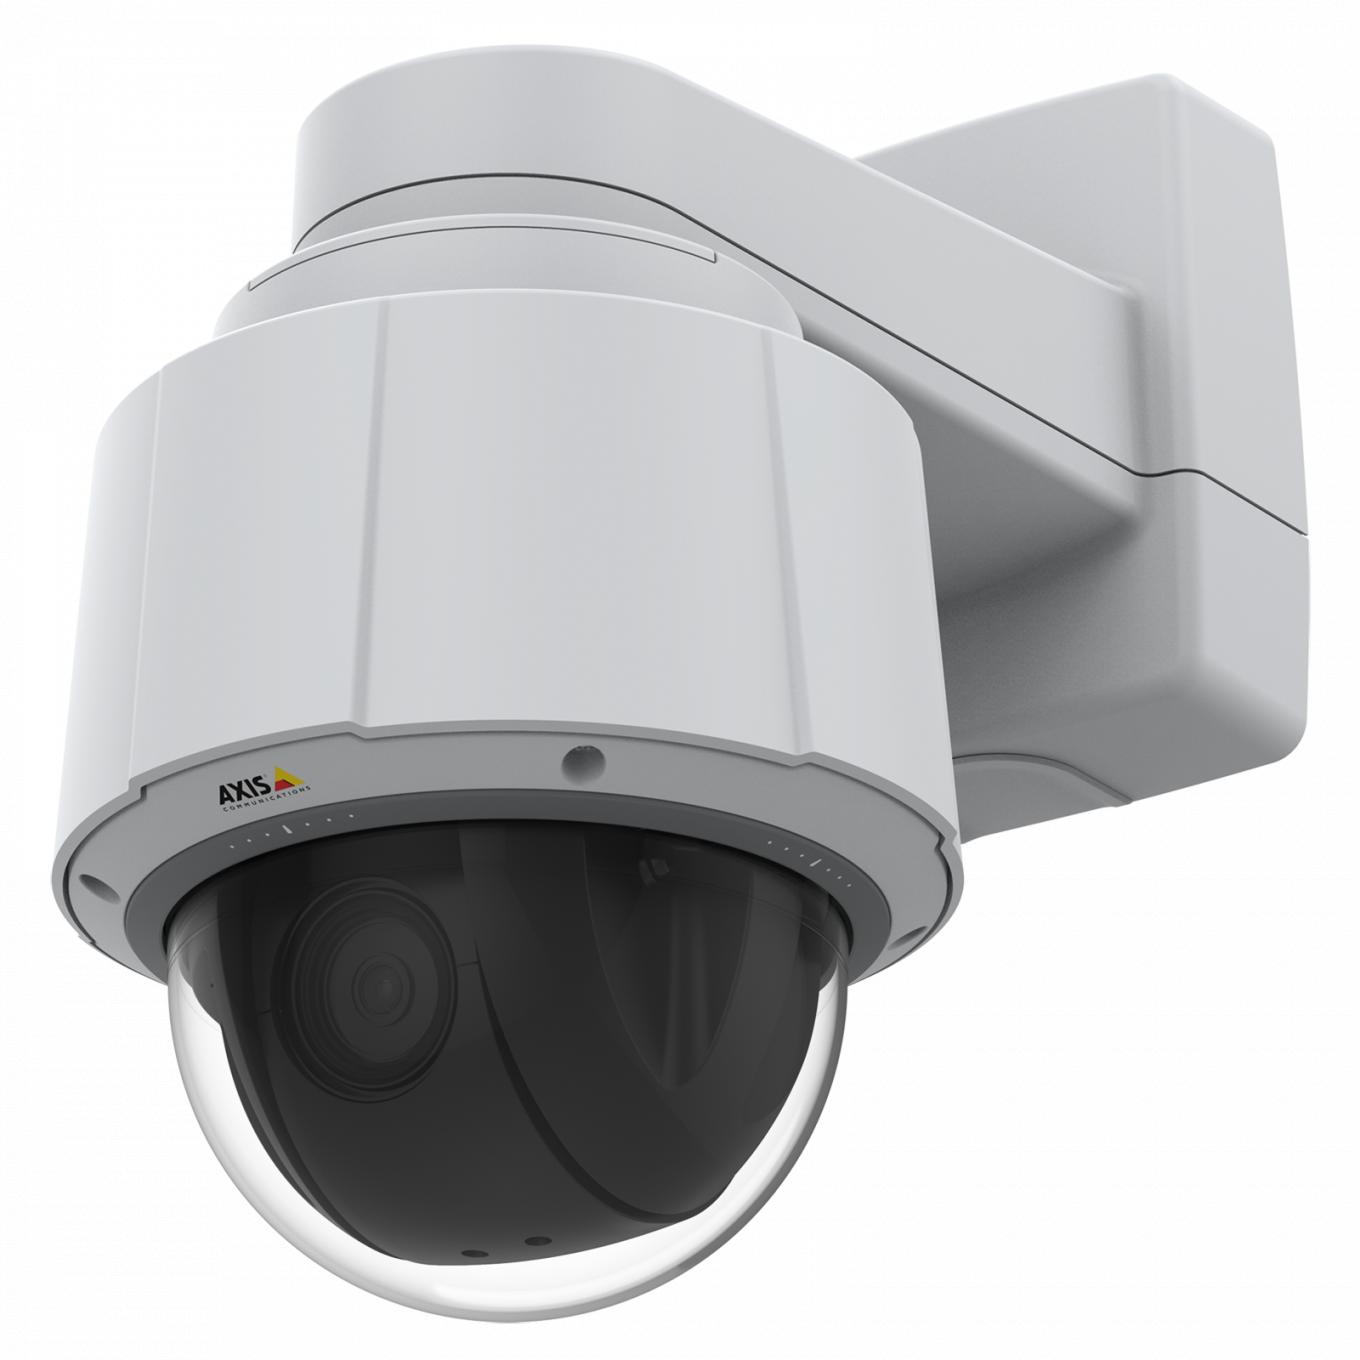 AXIS IP Camera Q6074는 TPM, FIPS 140-2 level 2 인증을 받았으며, 내장형 분석 기능을 제공합니다.